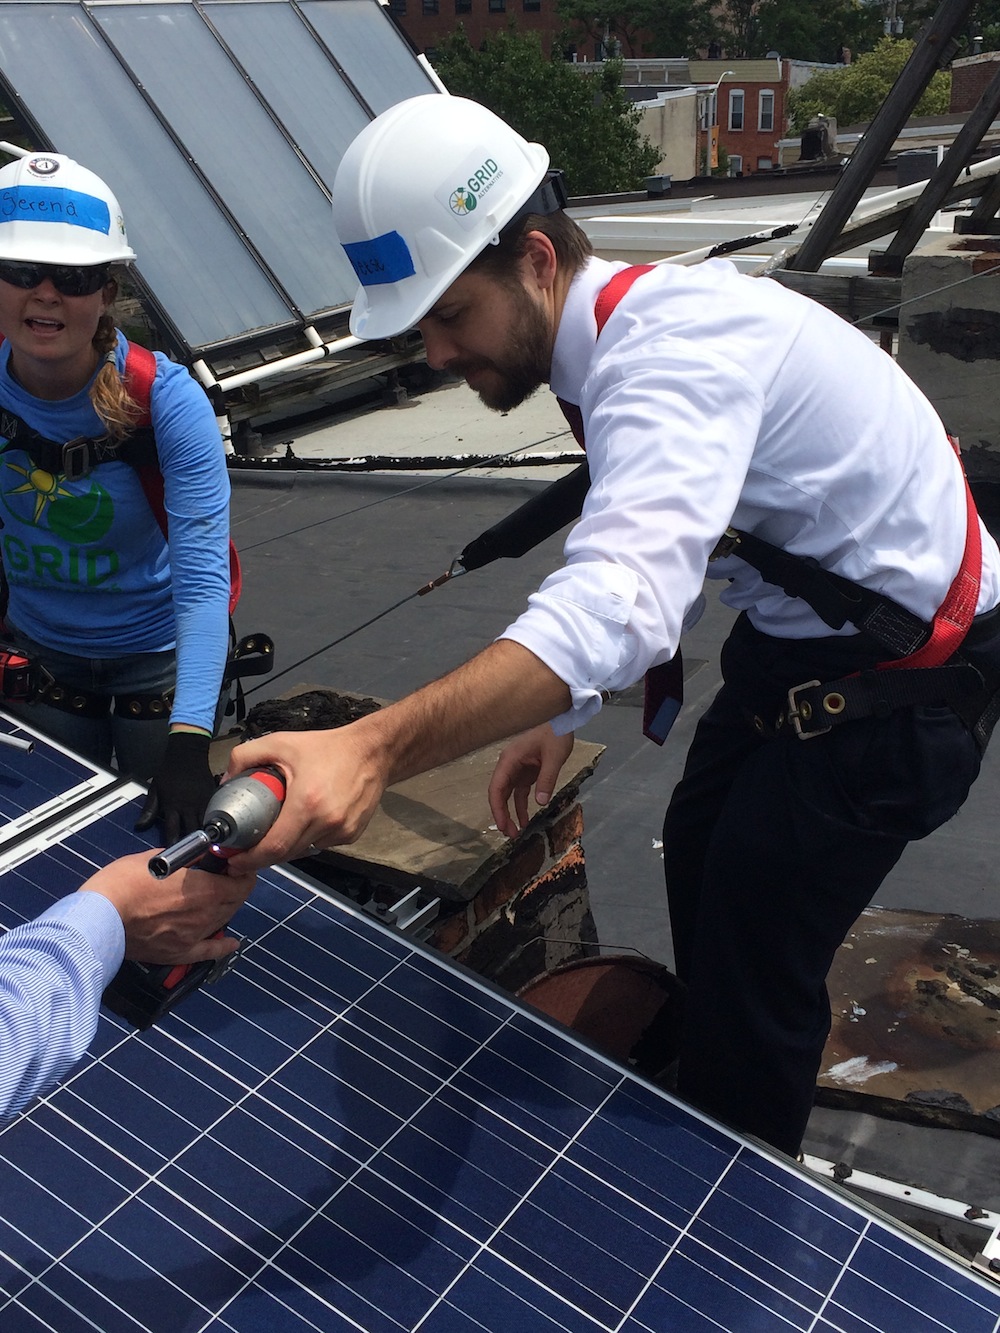 Senior Advisor Brian Deese installs solar panels